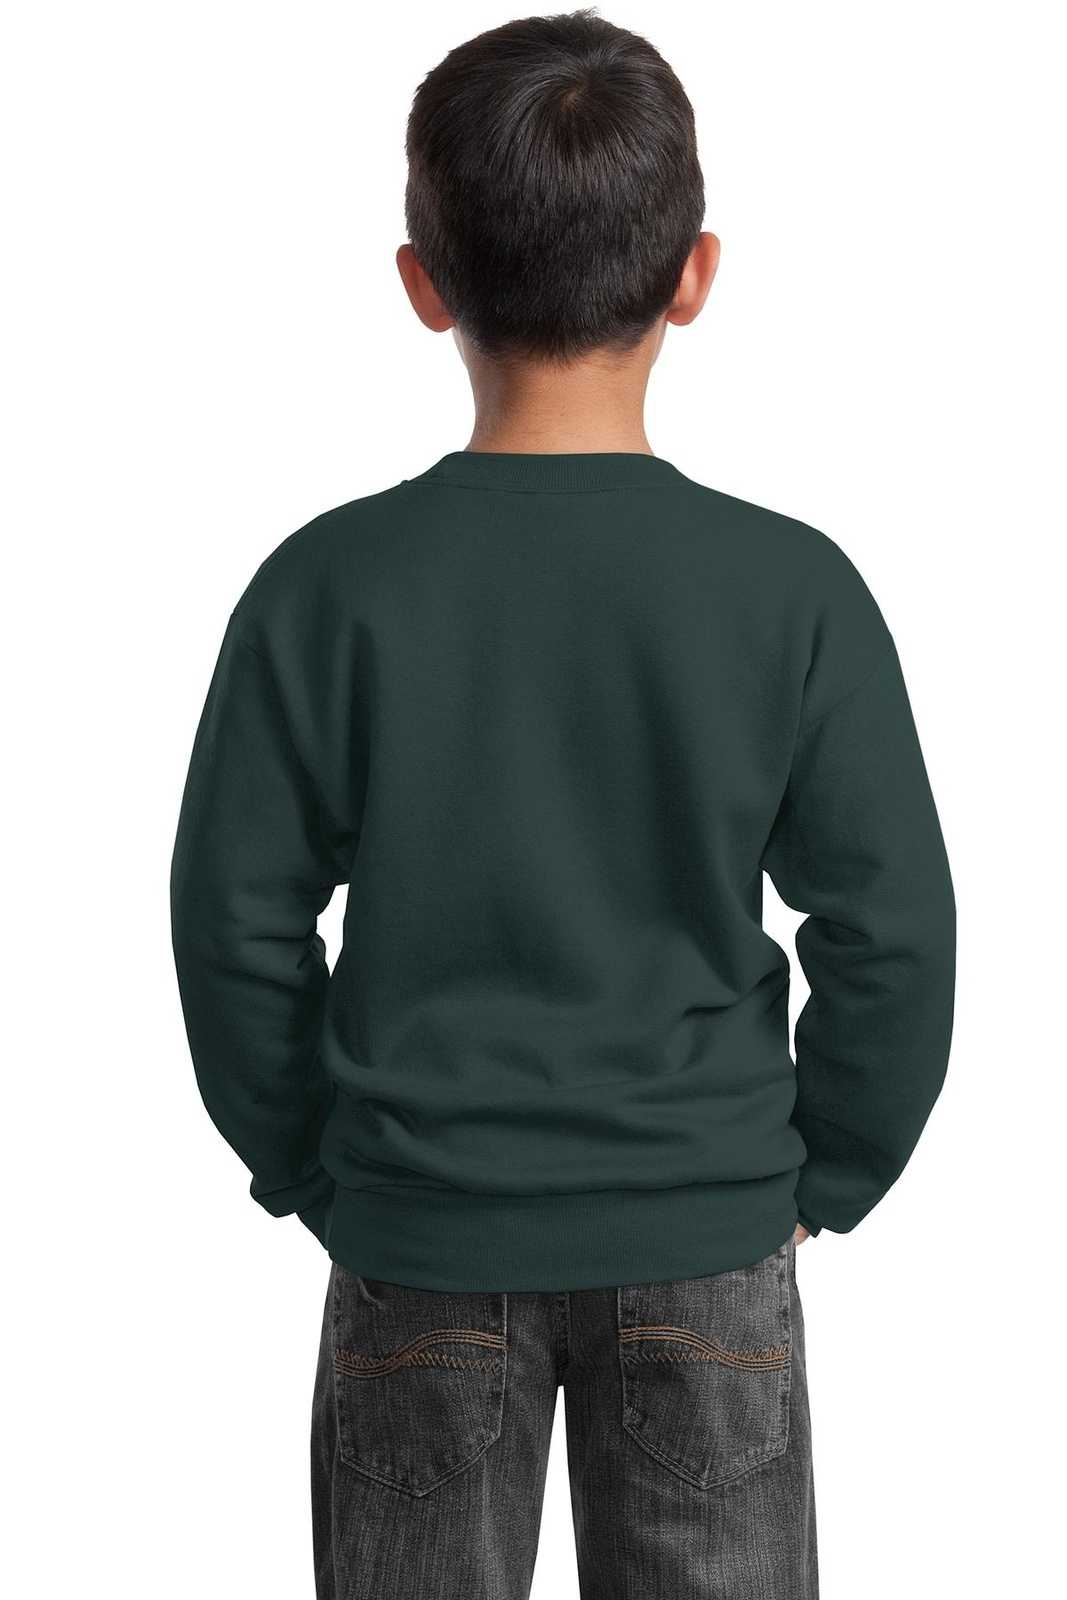 Port &amp; Company PC90Y Youth Core Fleece Crewneck Sweatshirt - Dark Green - HIT a Double - 2